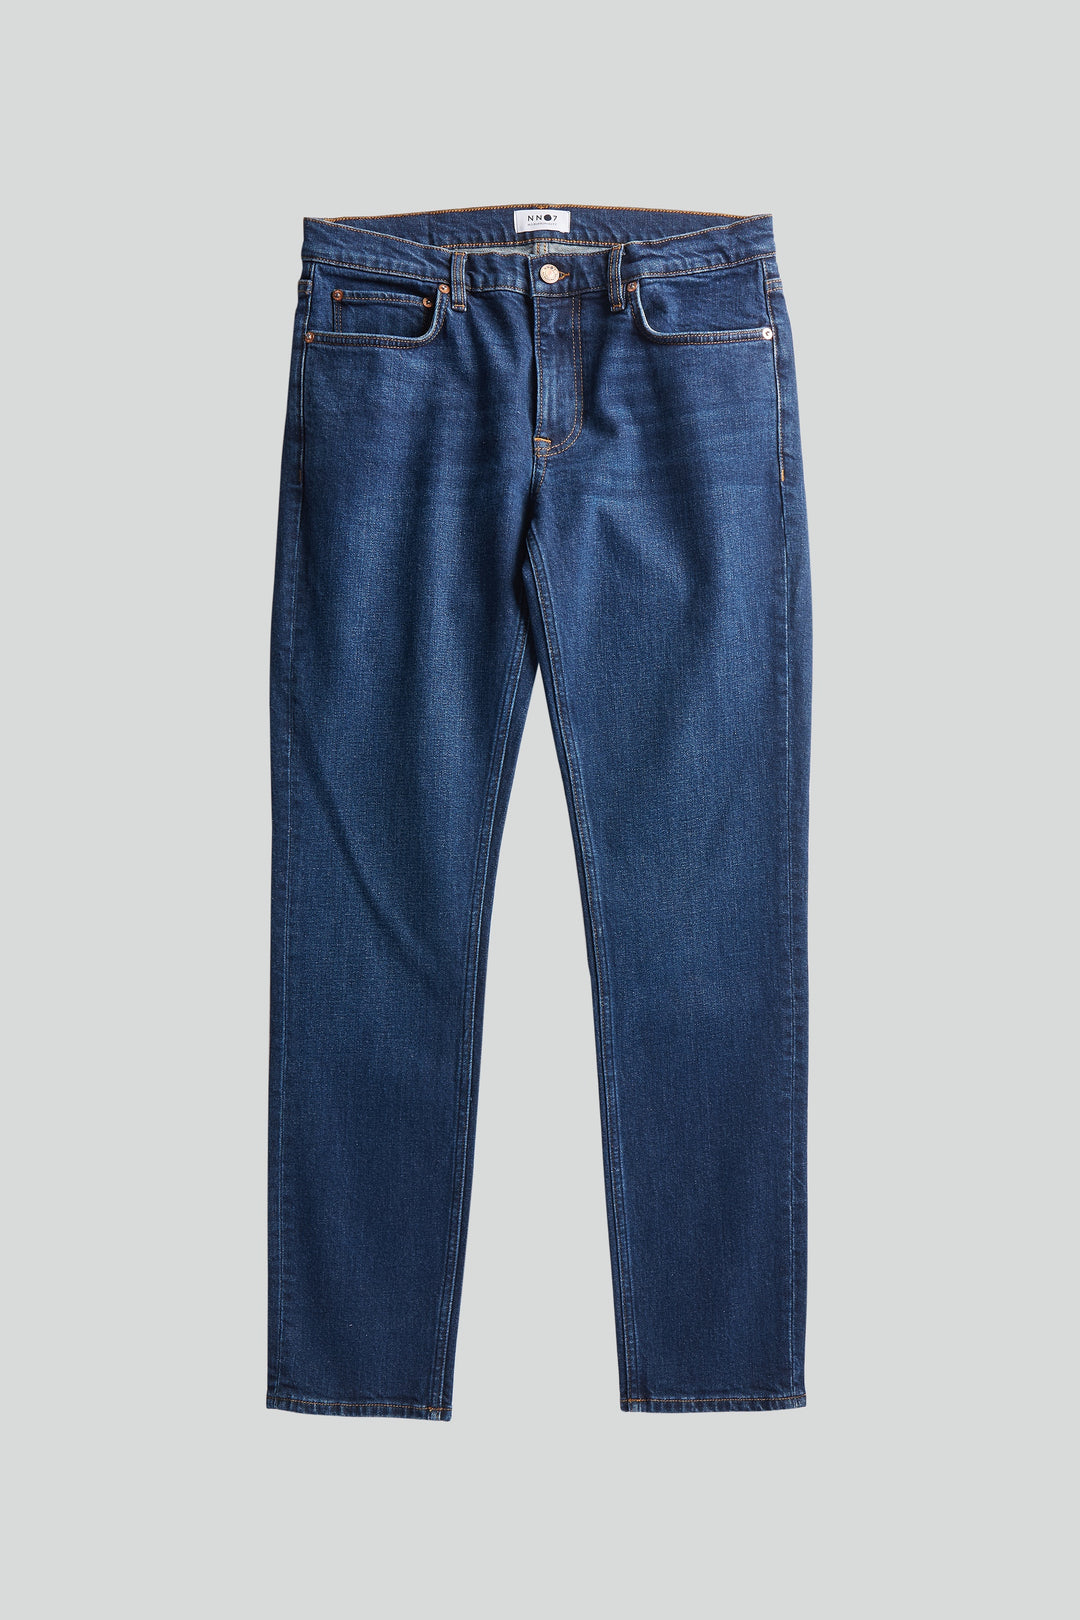 NN07 - Slater 1838 Jeans in Dark Indigo | Buster McGee